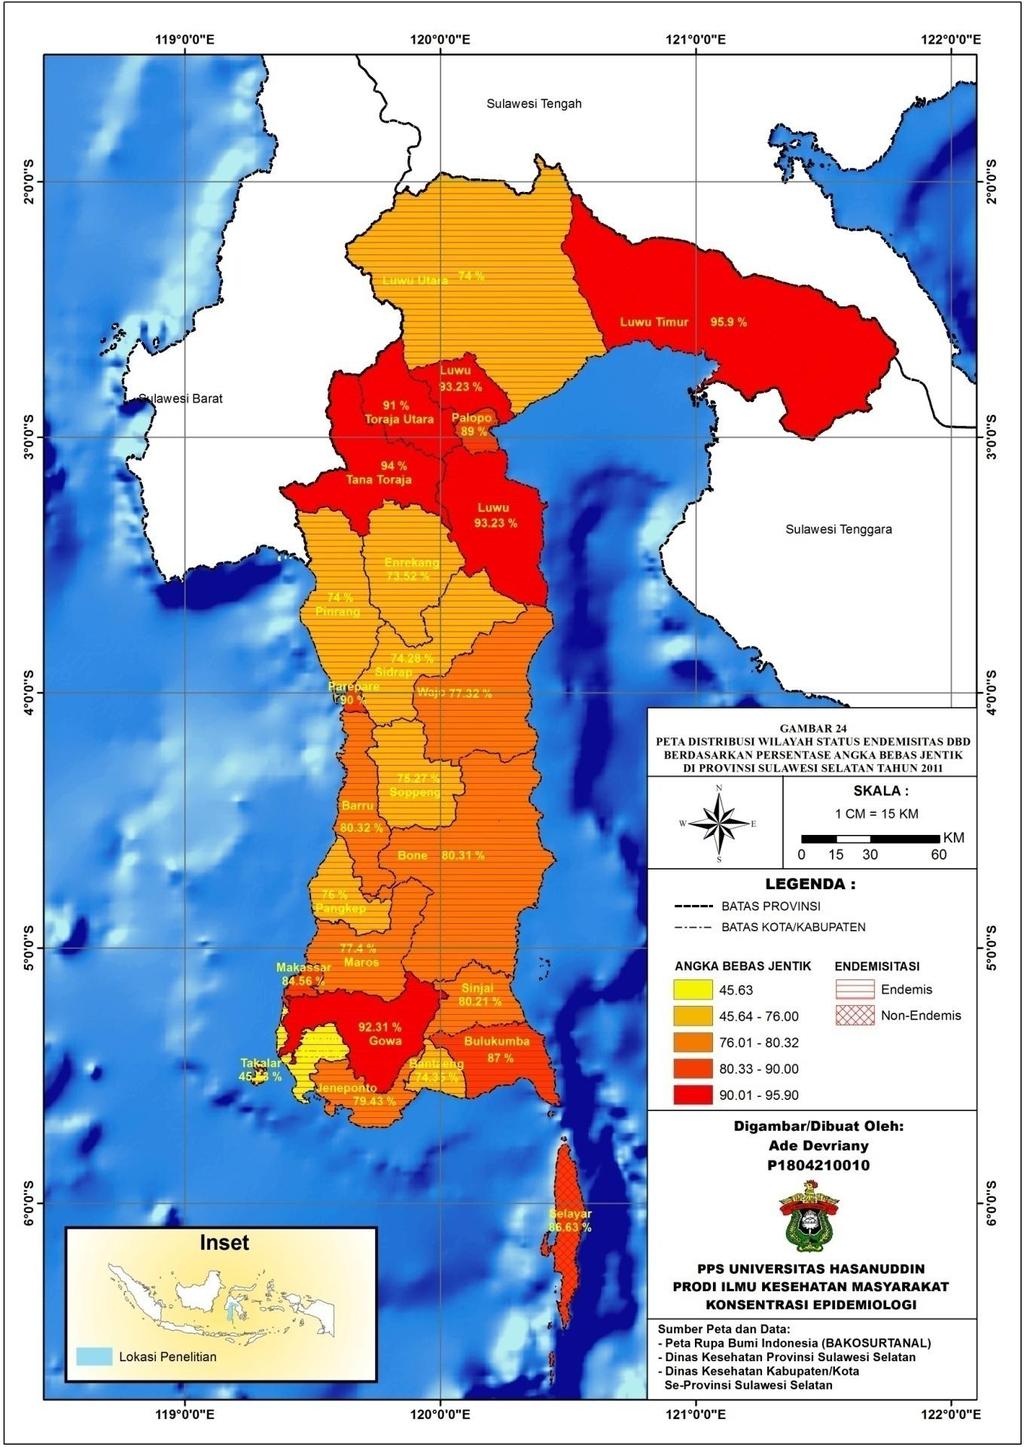 Map of region distribution of dengue endemicity status based on larva-f